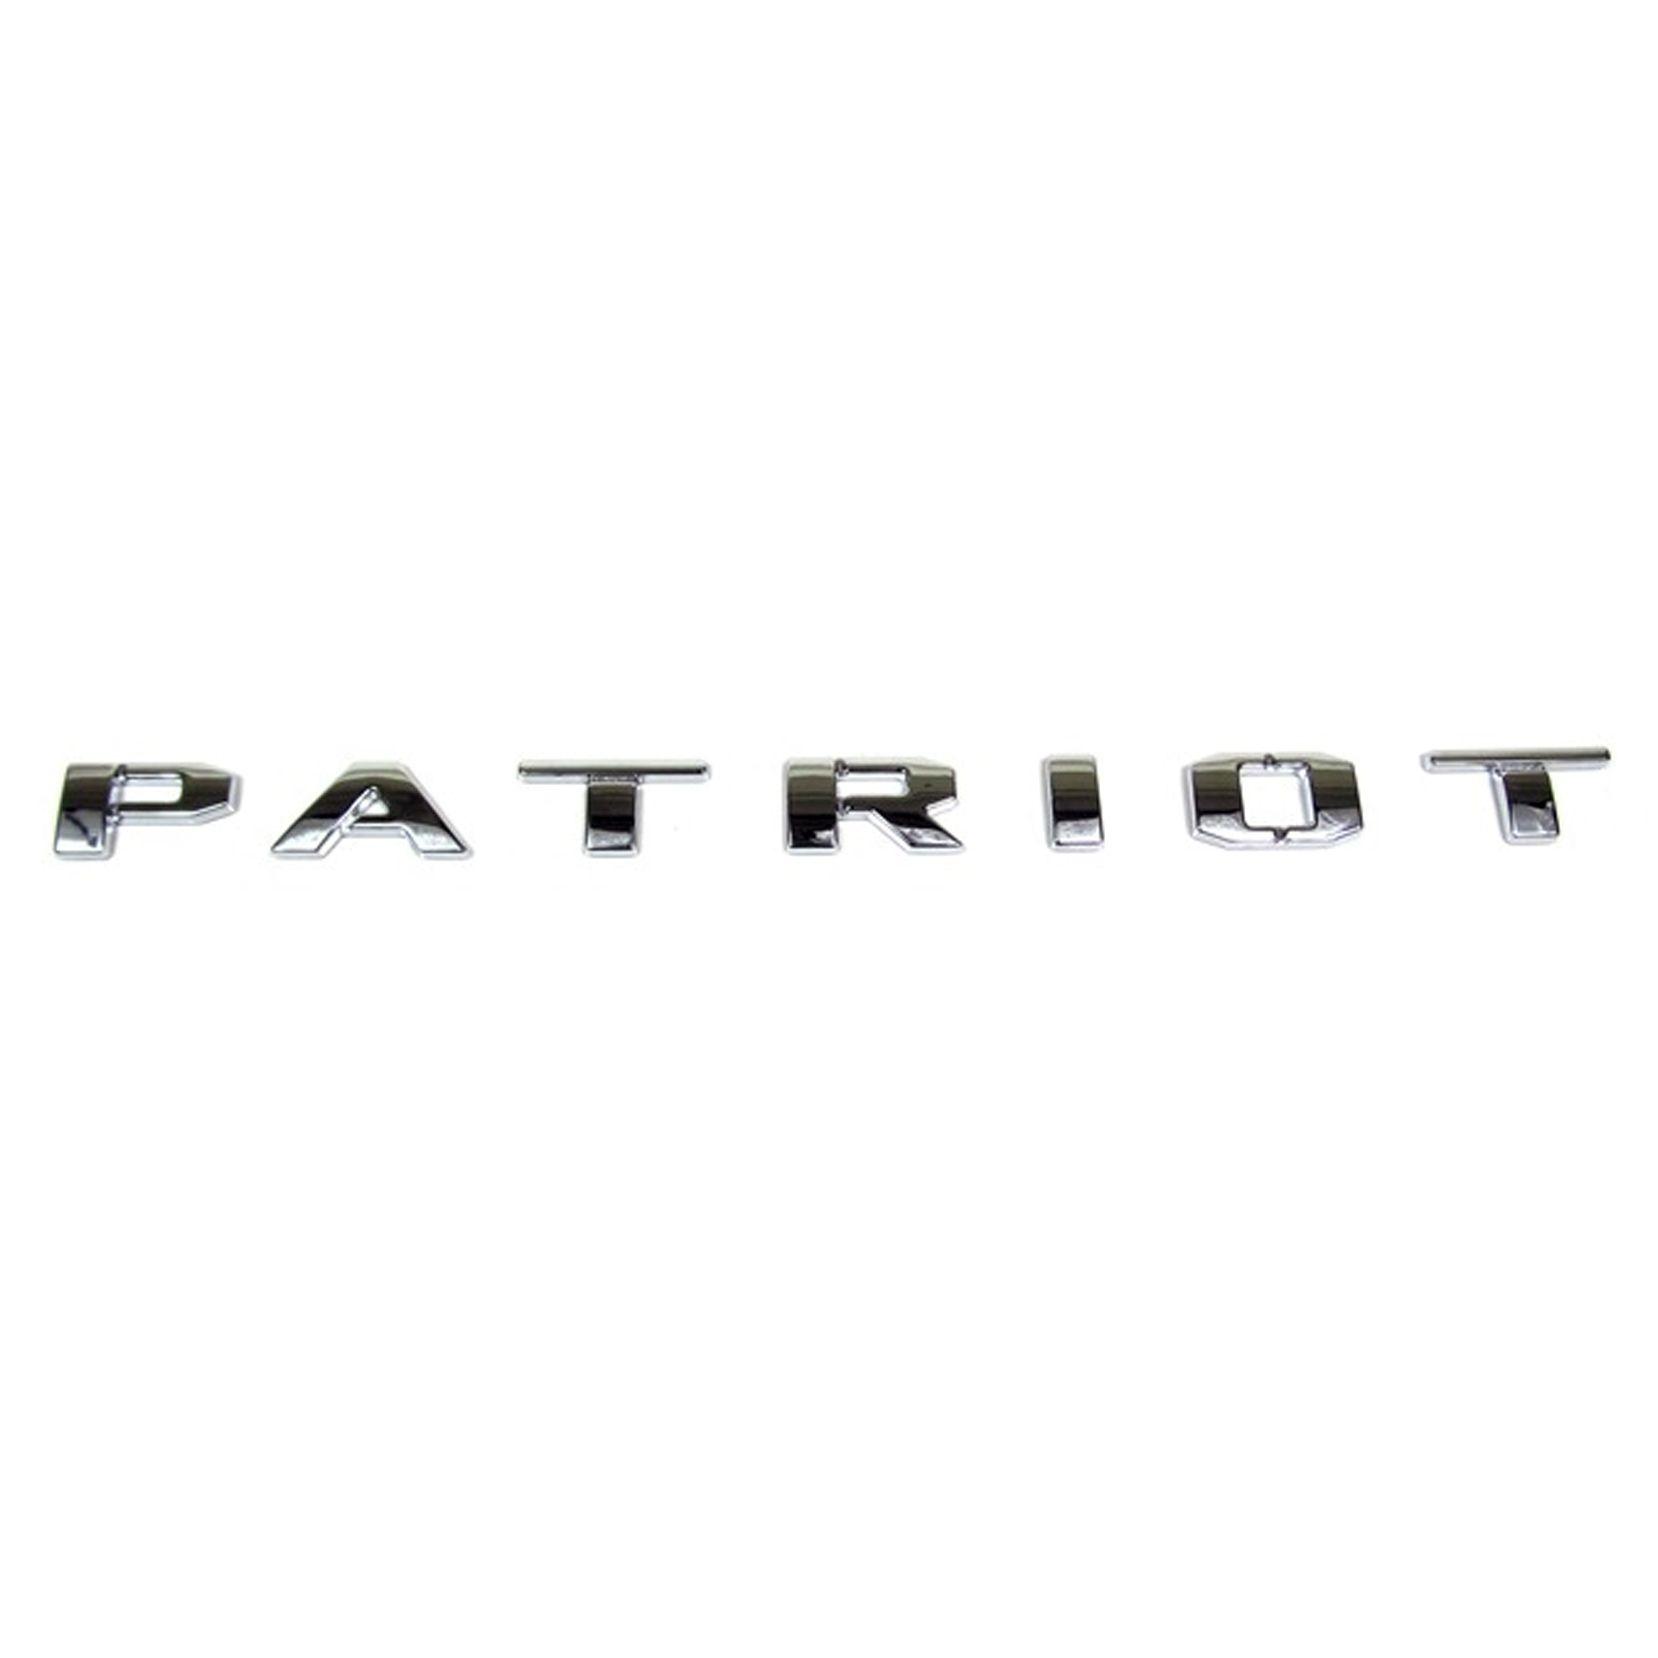 Jeep Patriot Logo - Choose Your Jeep - Jeep Patriot MK (2007 2016) - Decals, Emblems